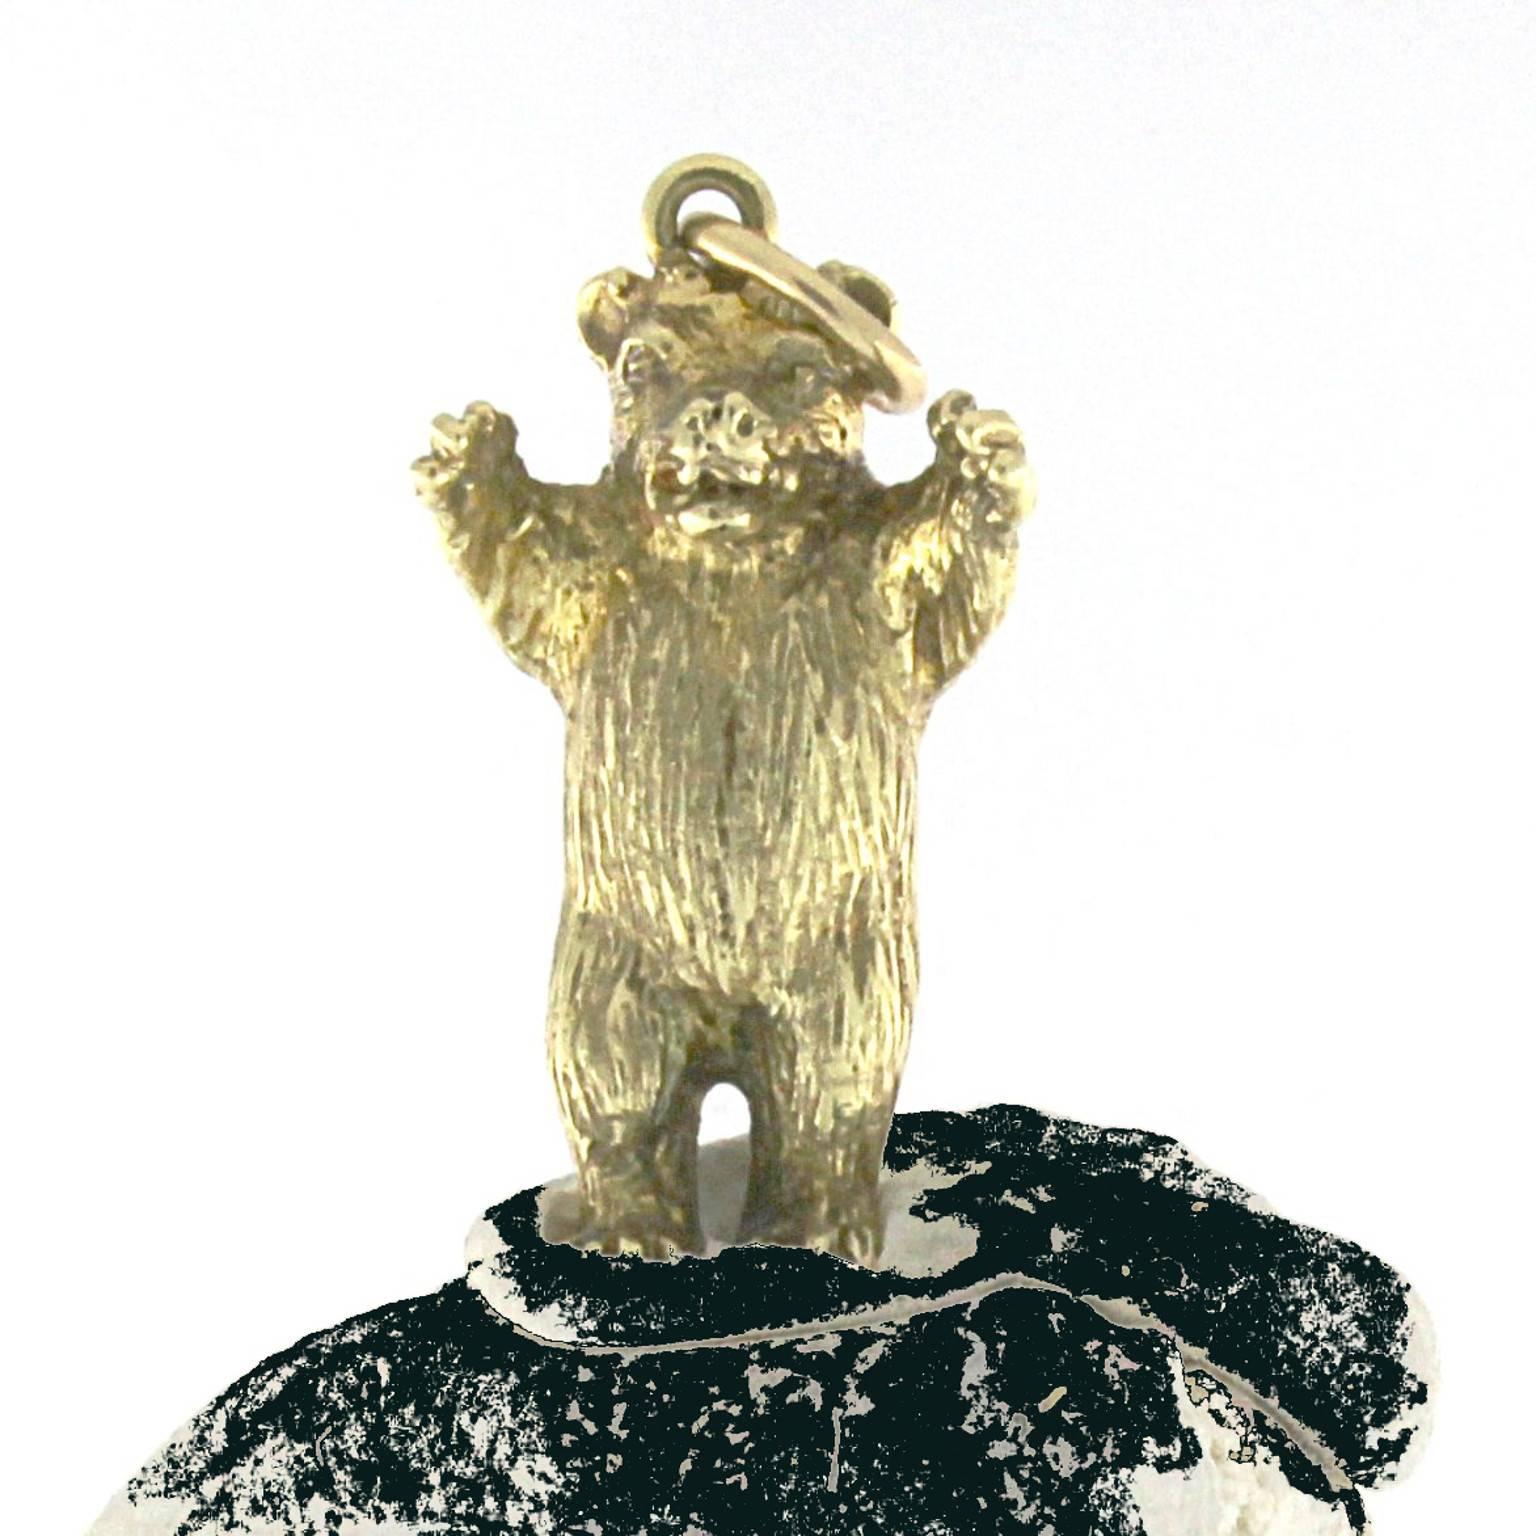 18 kt gold sculptured bear
total weight of gold GR 9.20
Stamp 750